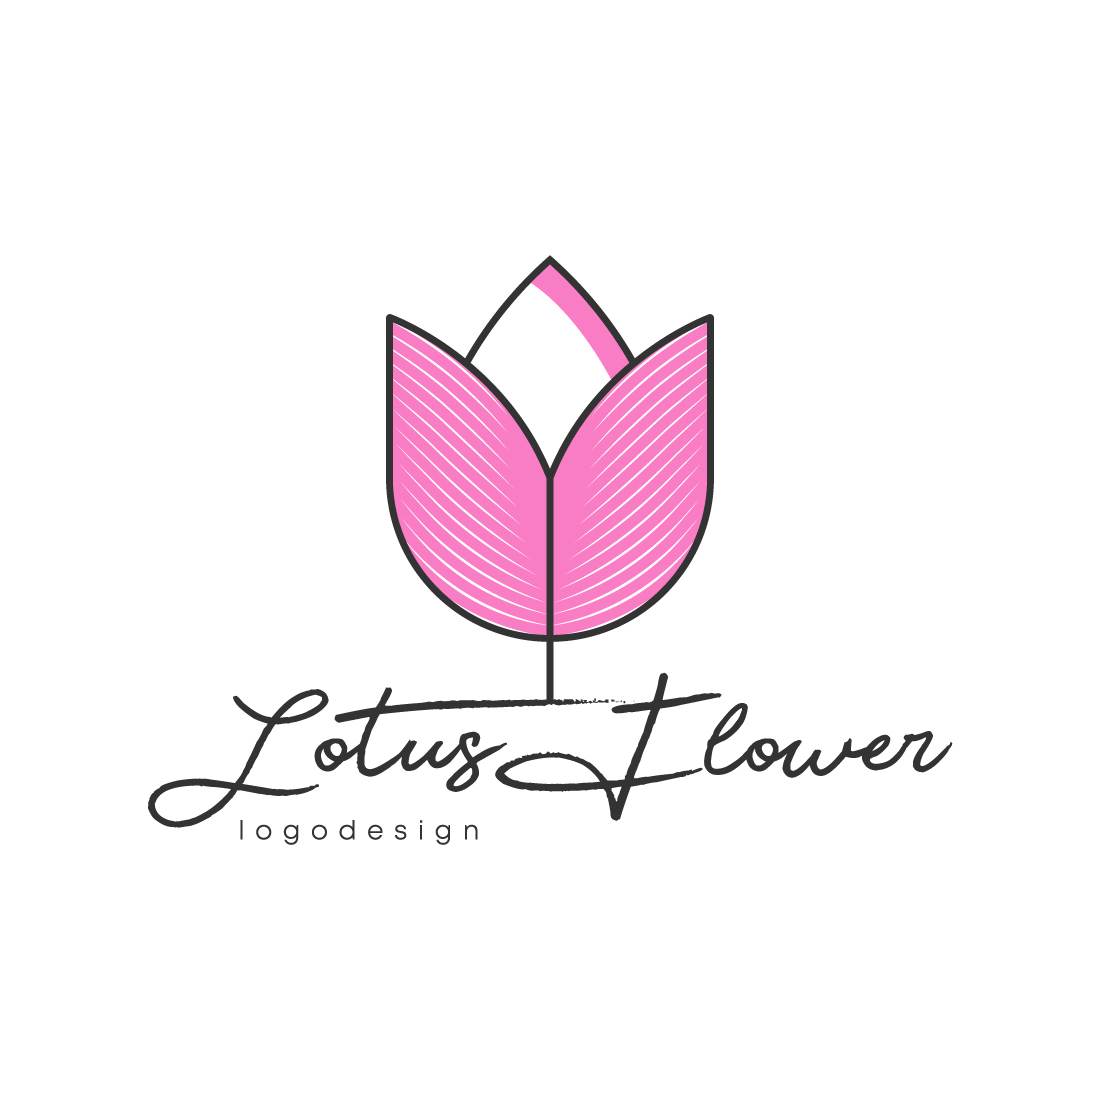 Lotus logo preview image.